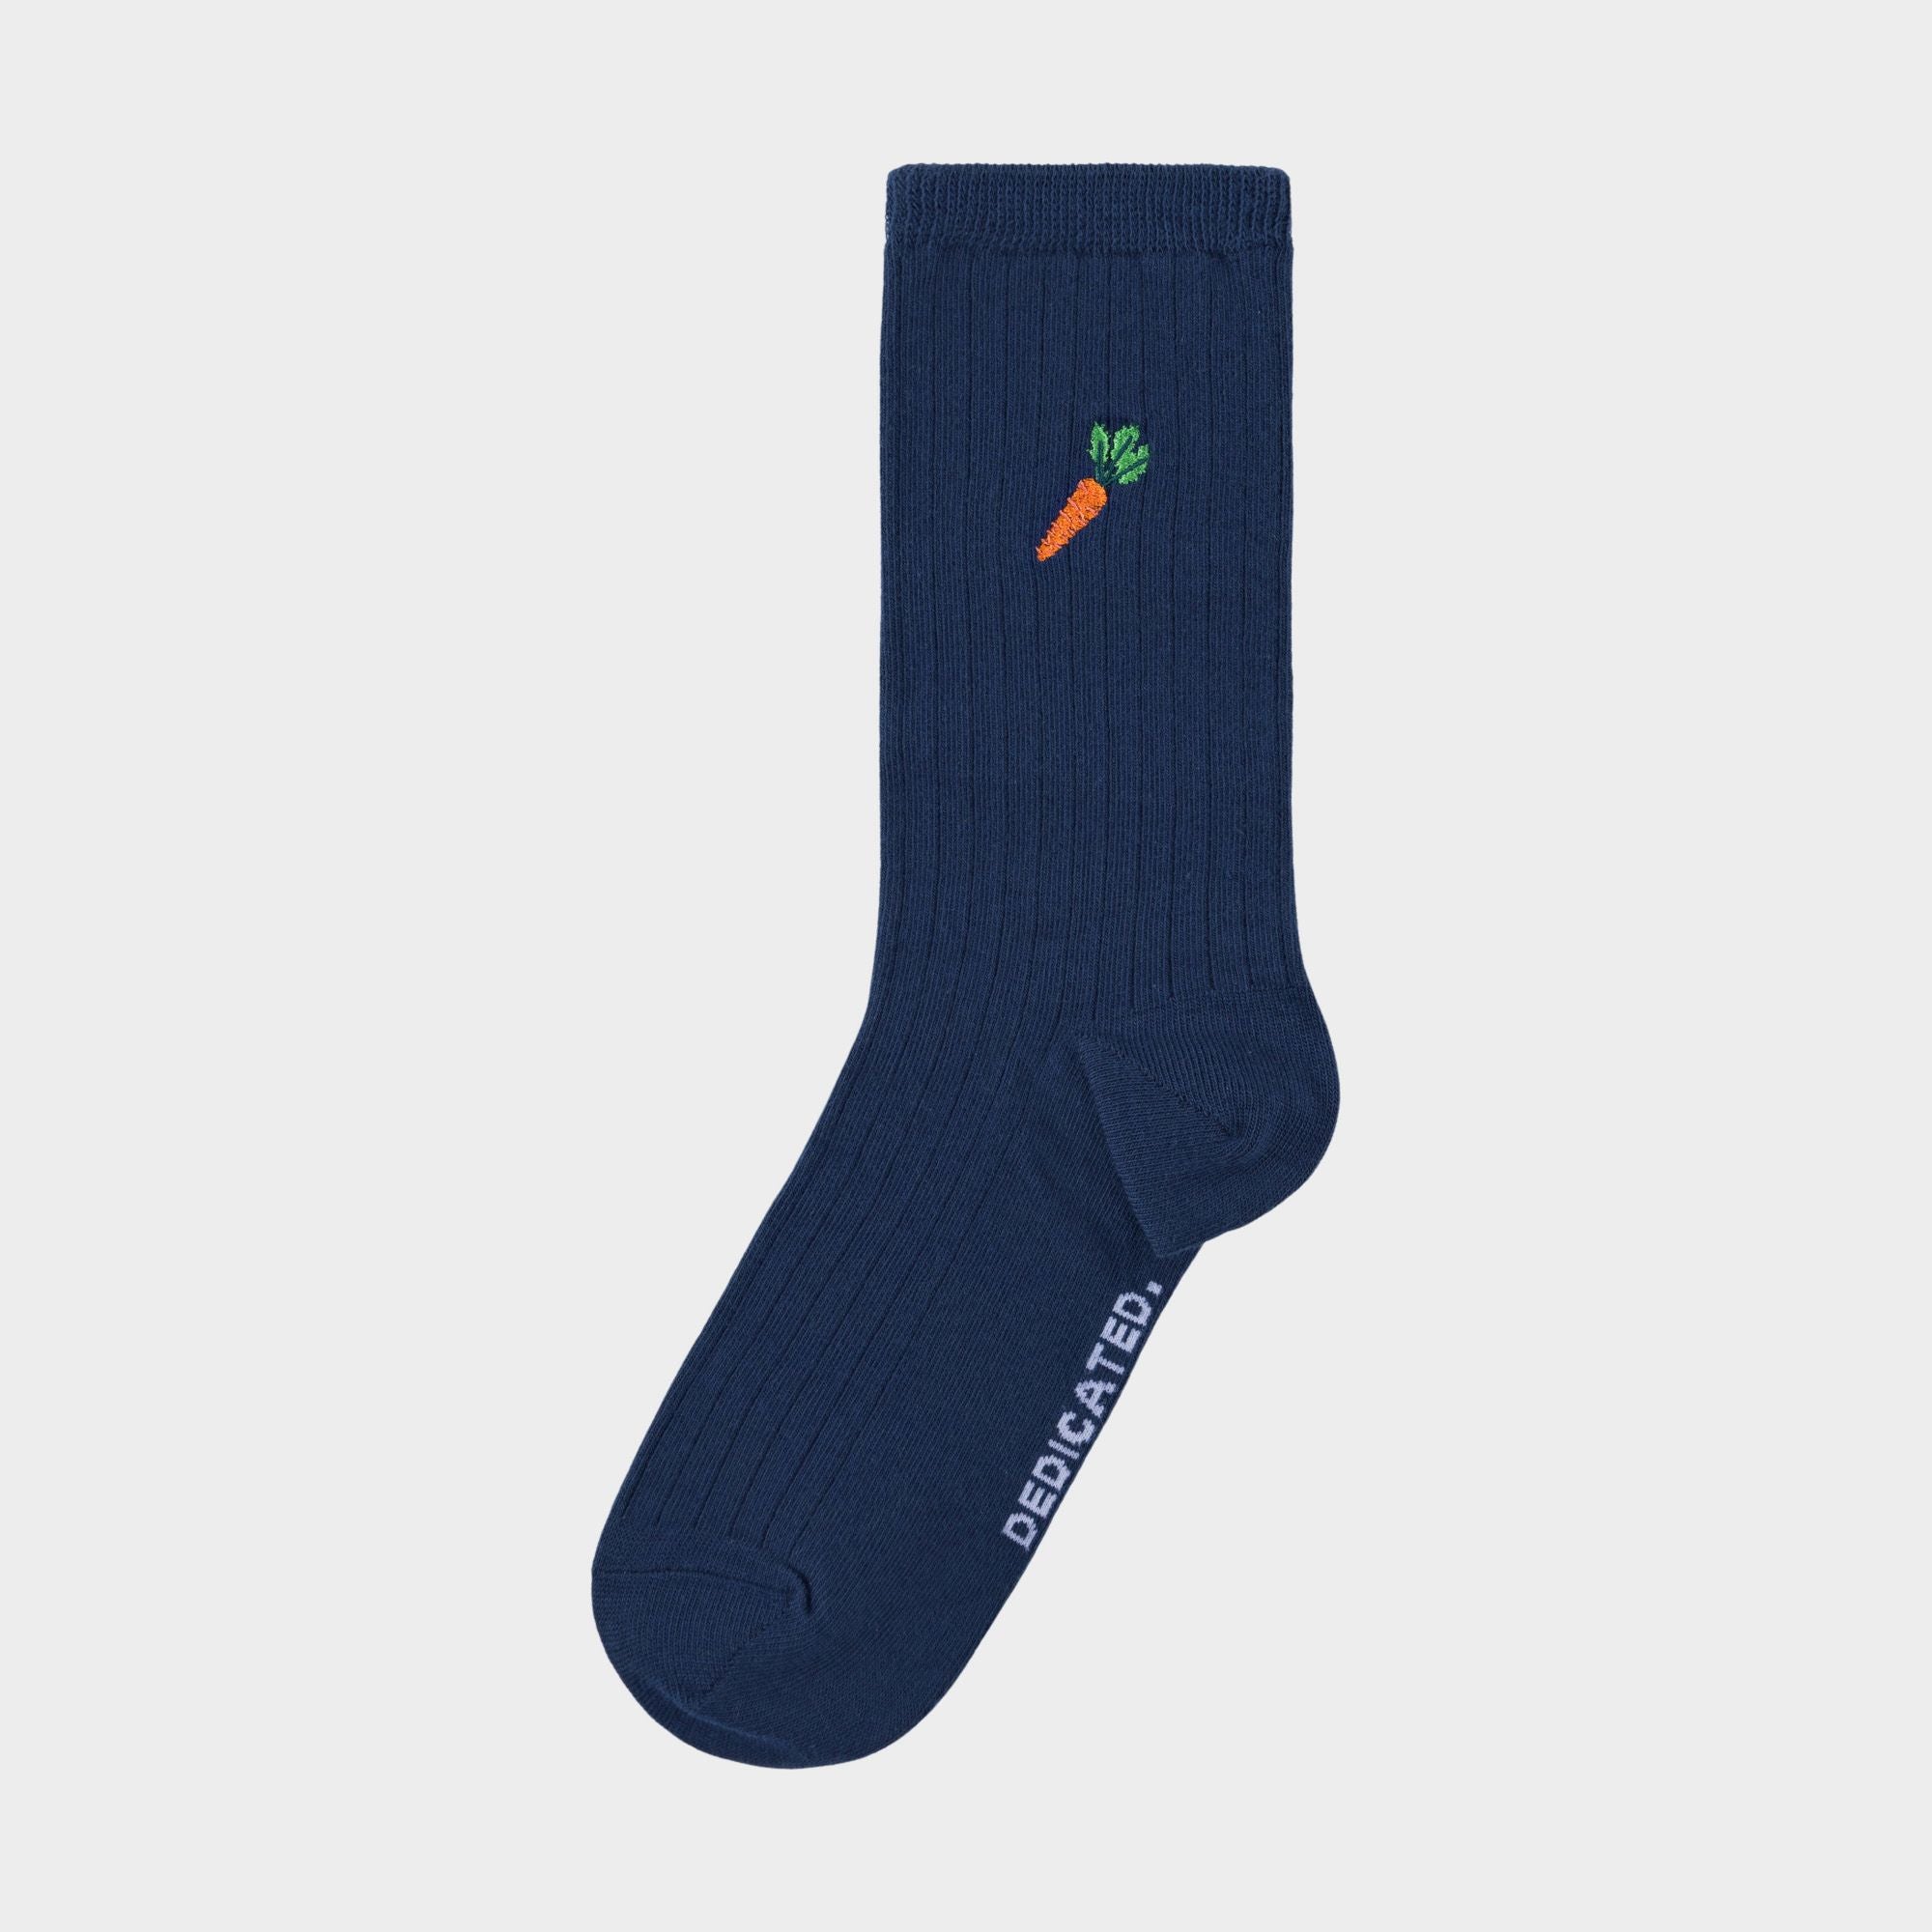 Vegetable socks in a set